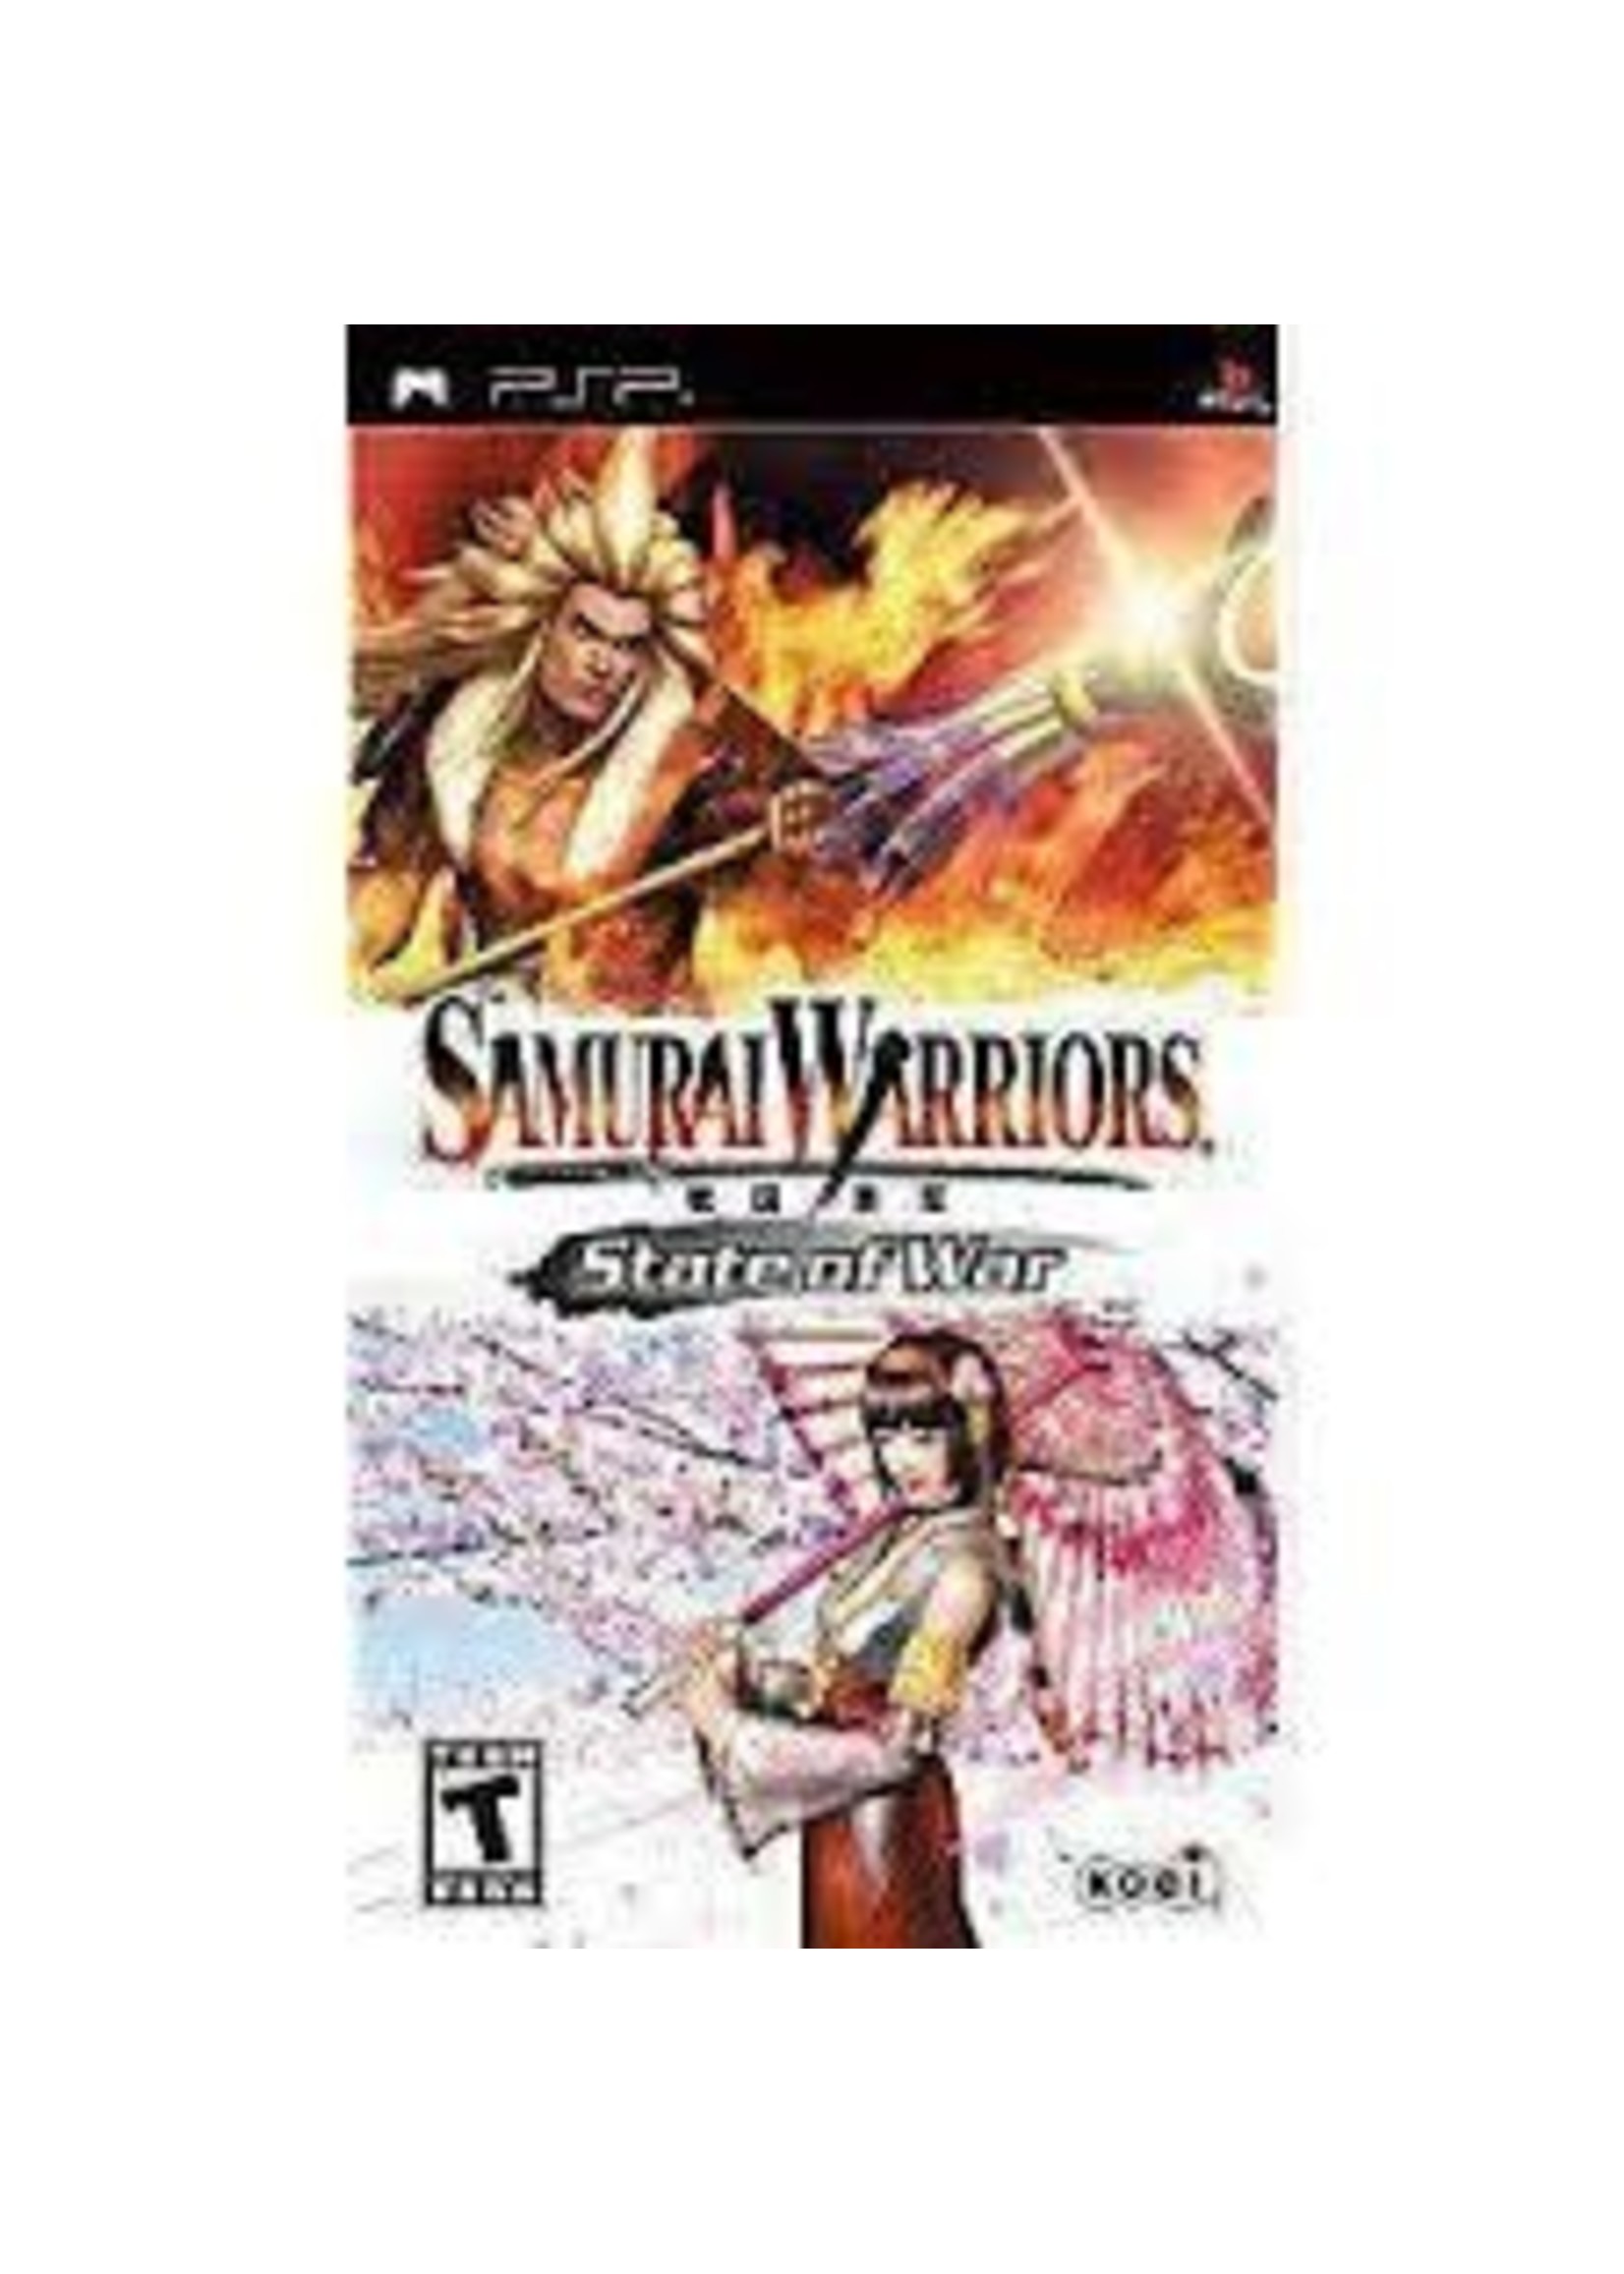 Sony Playstation Portable (PSP) Samurai Warriors State of War